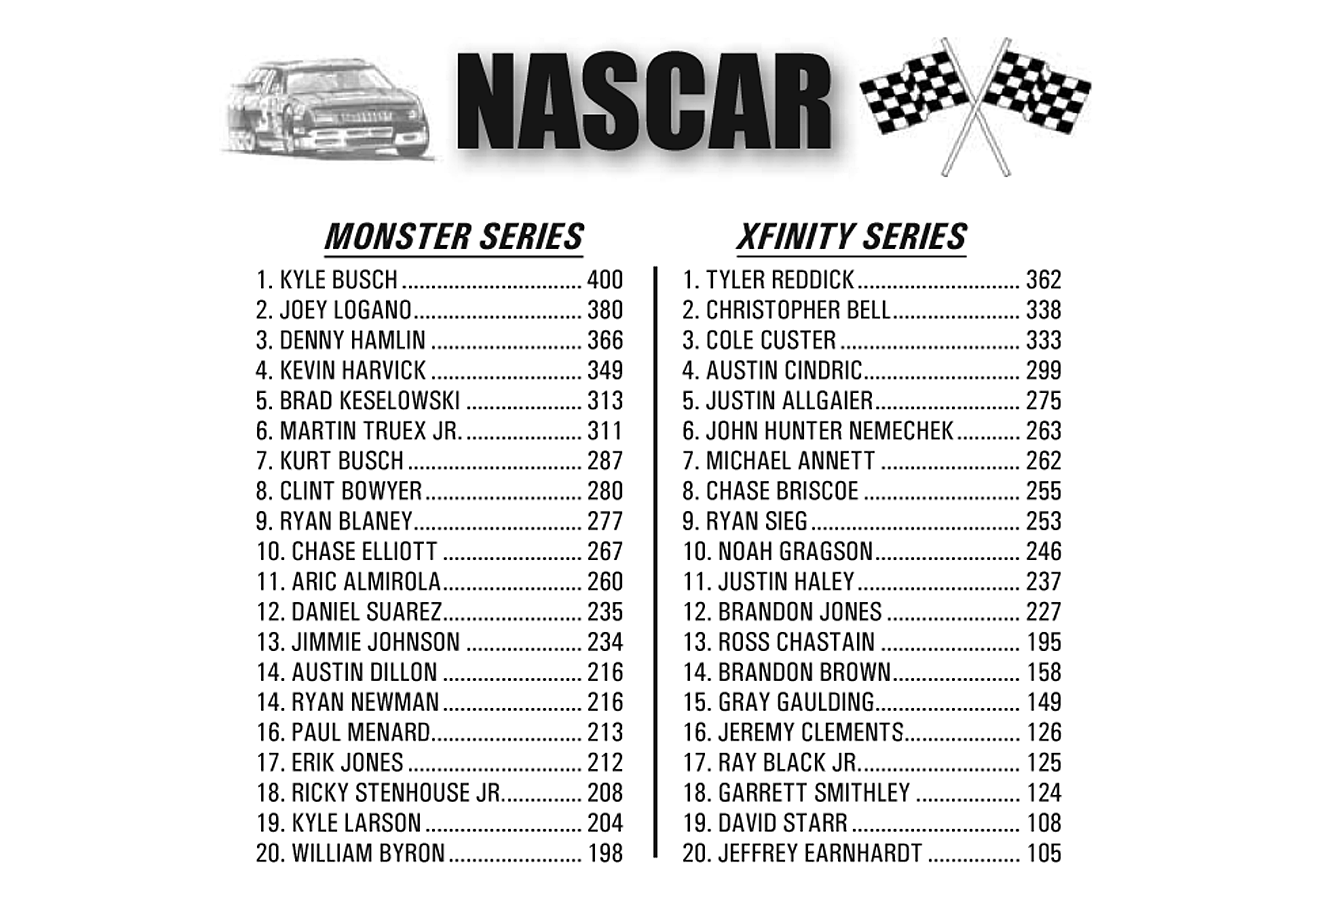 NASCAR Standings through April 15, 2019